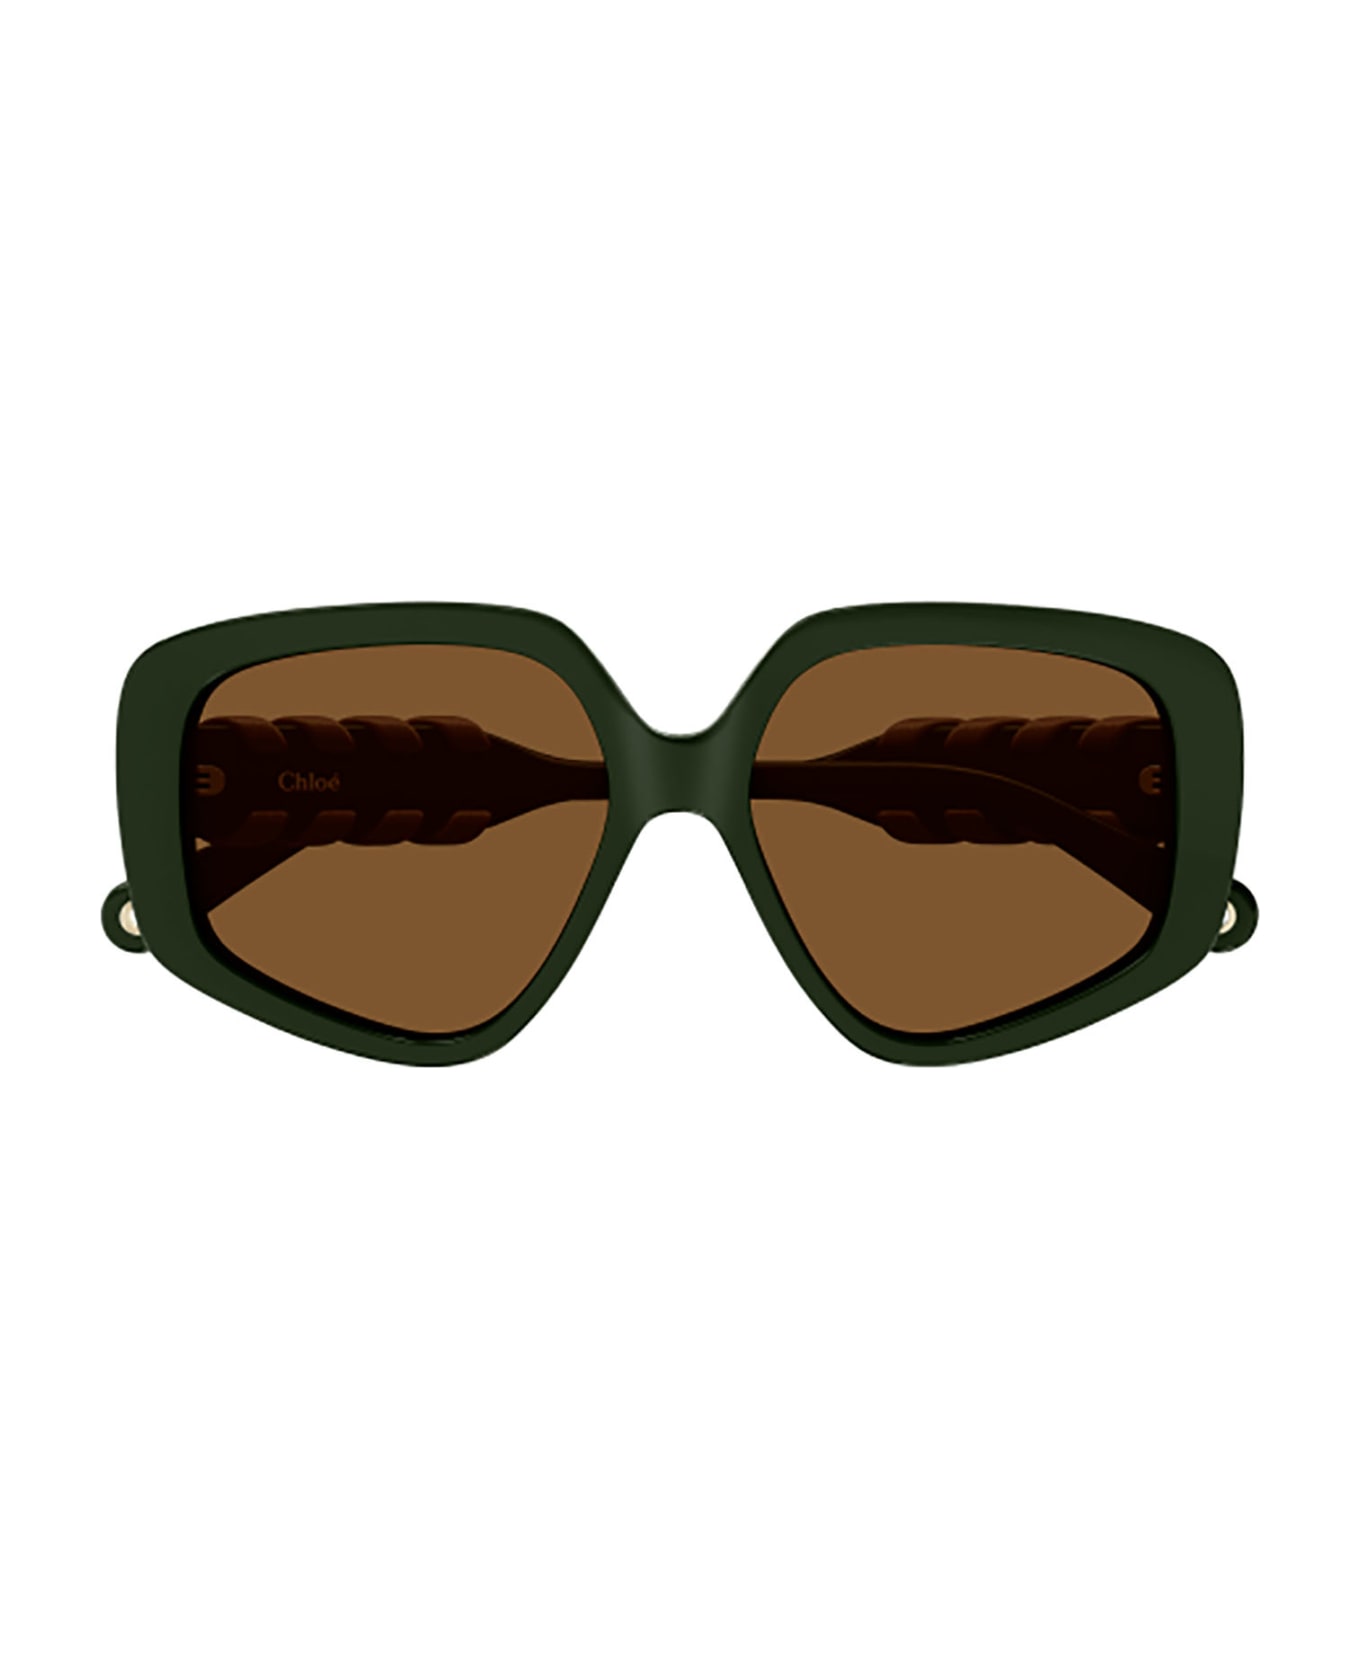 Chloé Eyewear CH0210S Sunglasses - Green Green Brown サングラス